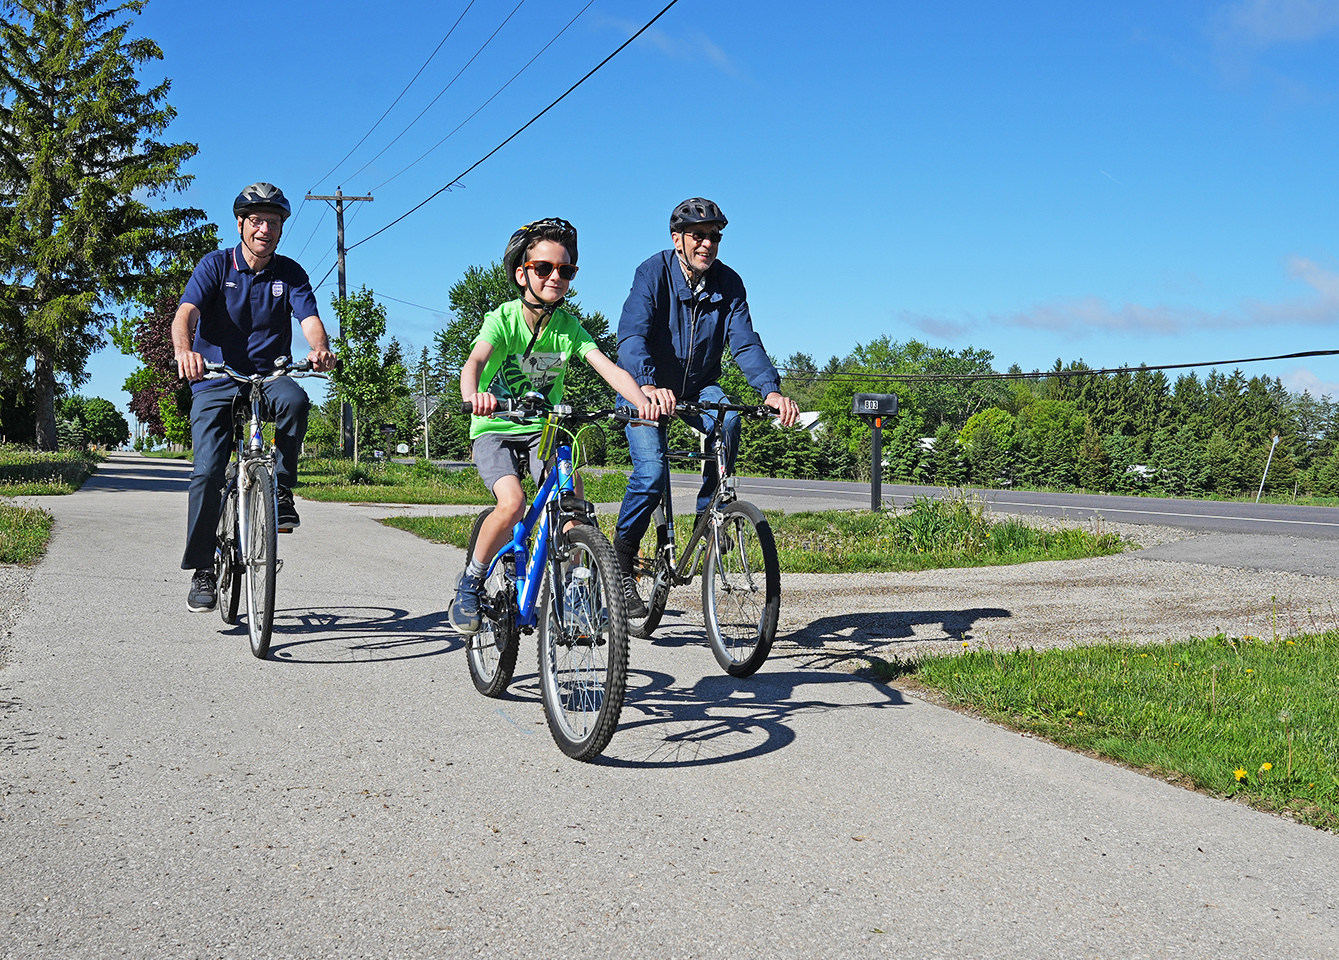 Three cyclists riding on asphalt pathway